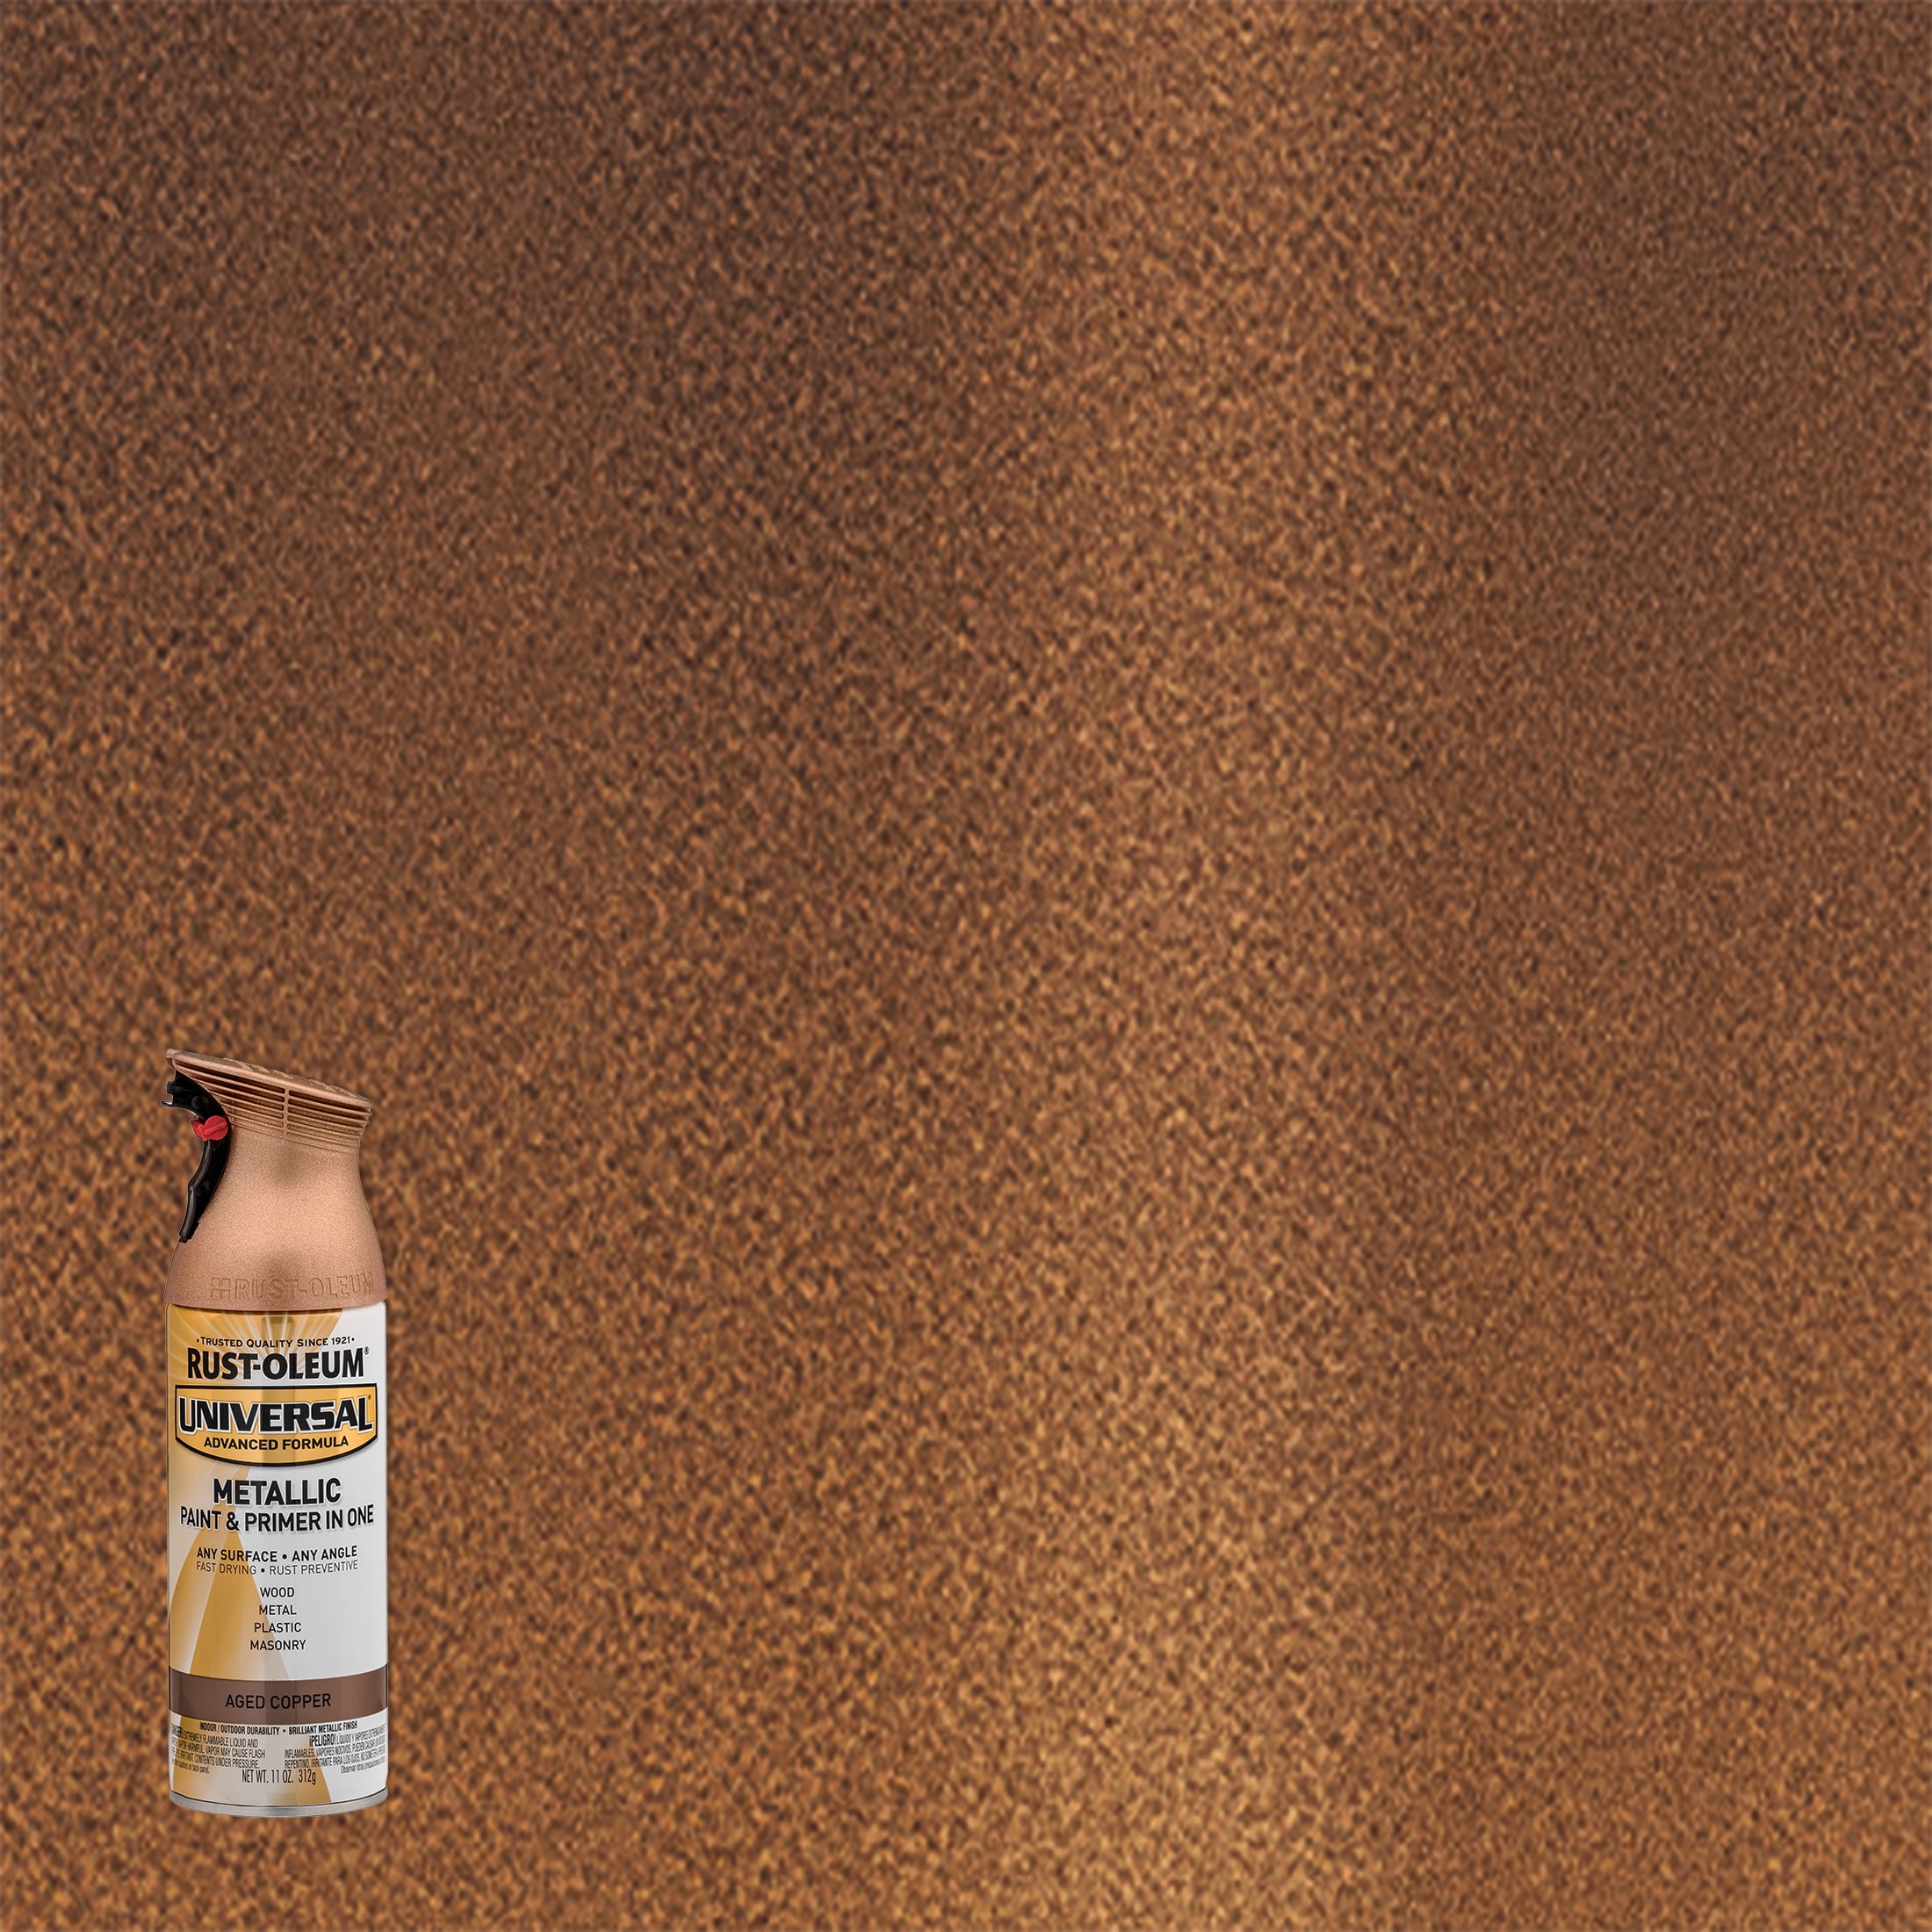 Aged Copper, Rust-Oleum Universal All Surface Interior/Exterior Metallic Spray Paint, 11 oz